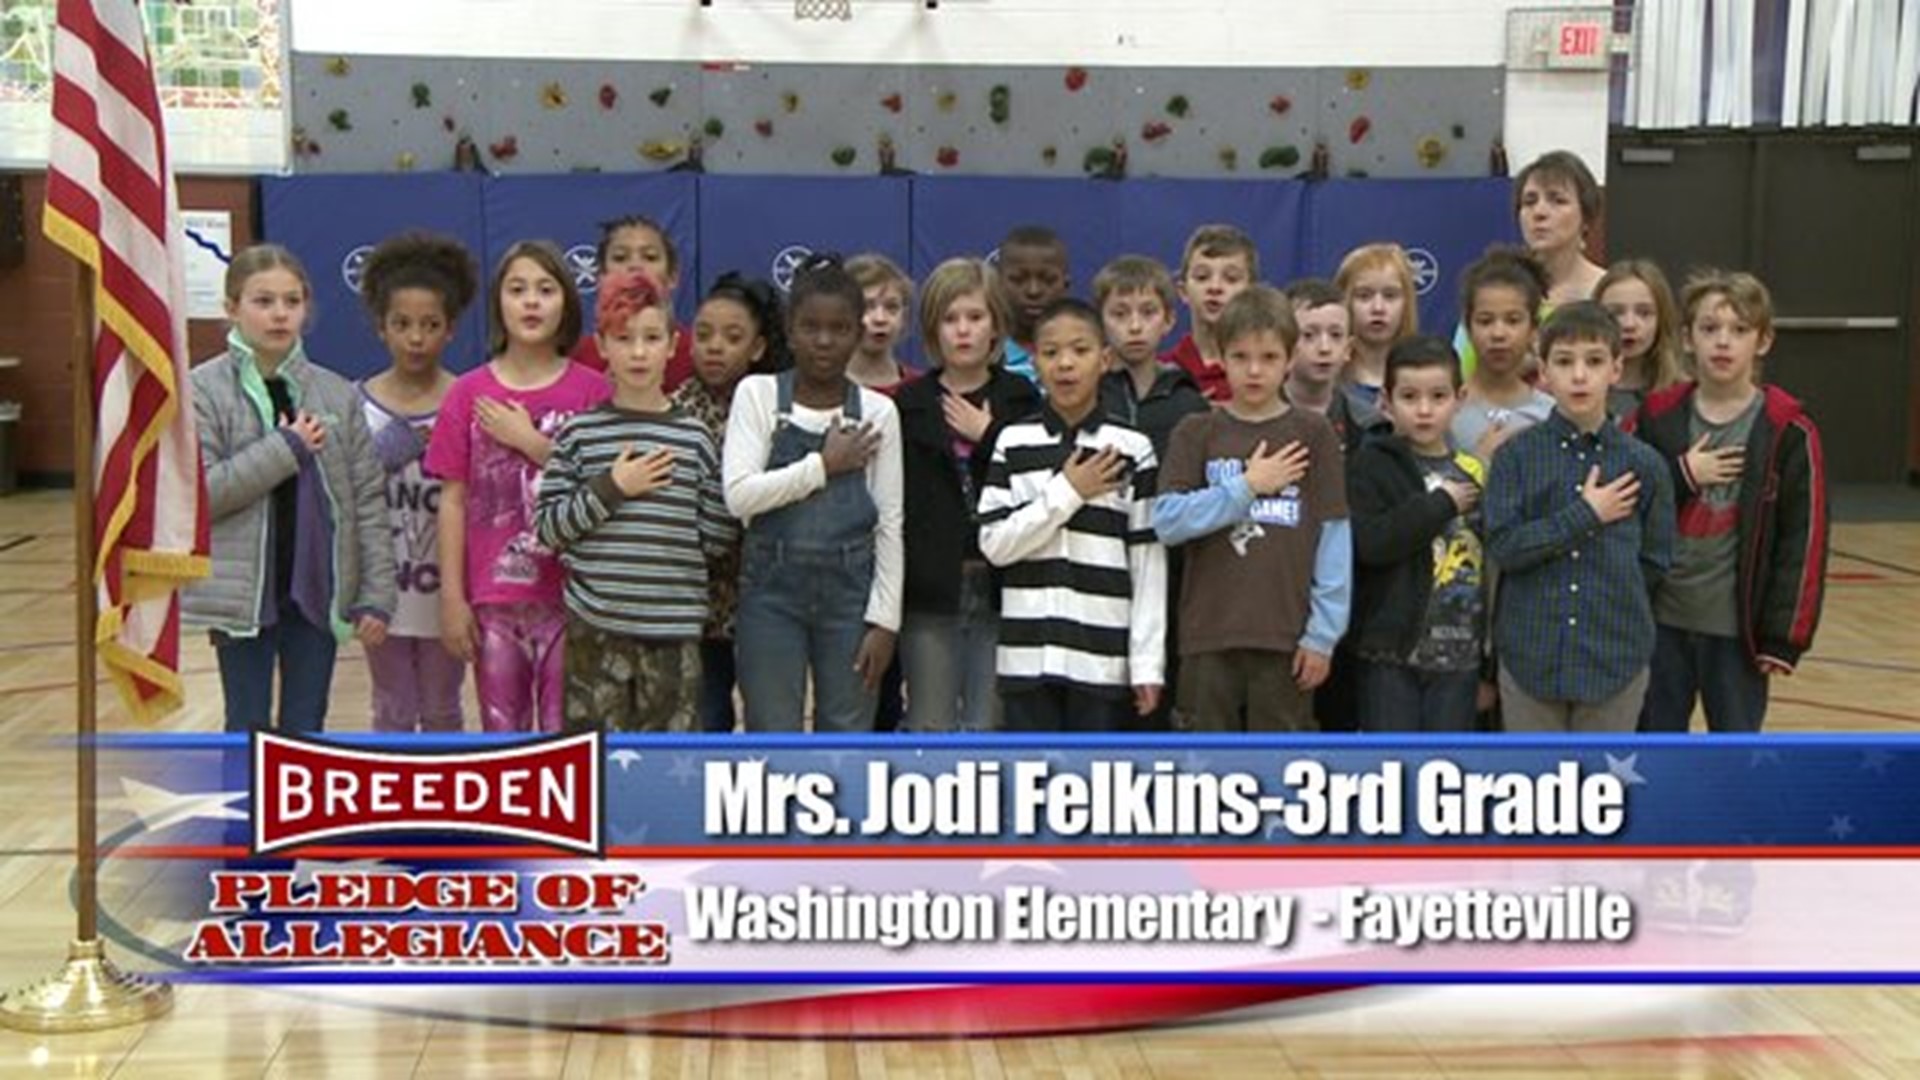 Washington Elementary - Fayetteville, Mrs. Felkins - Third Grade